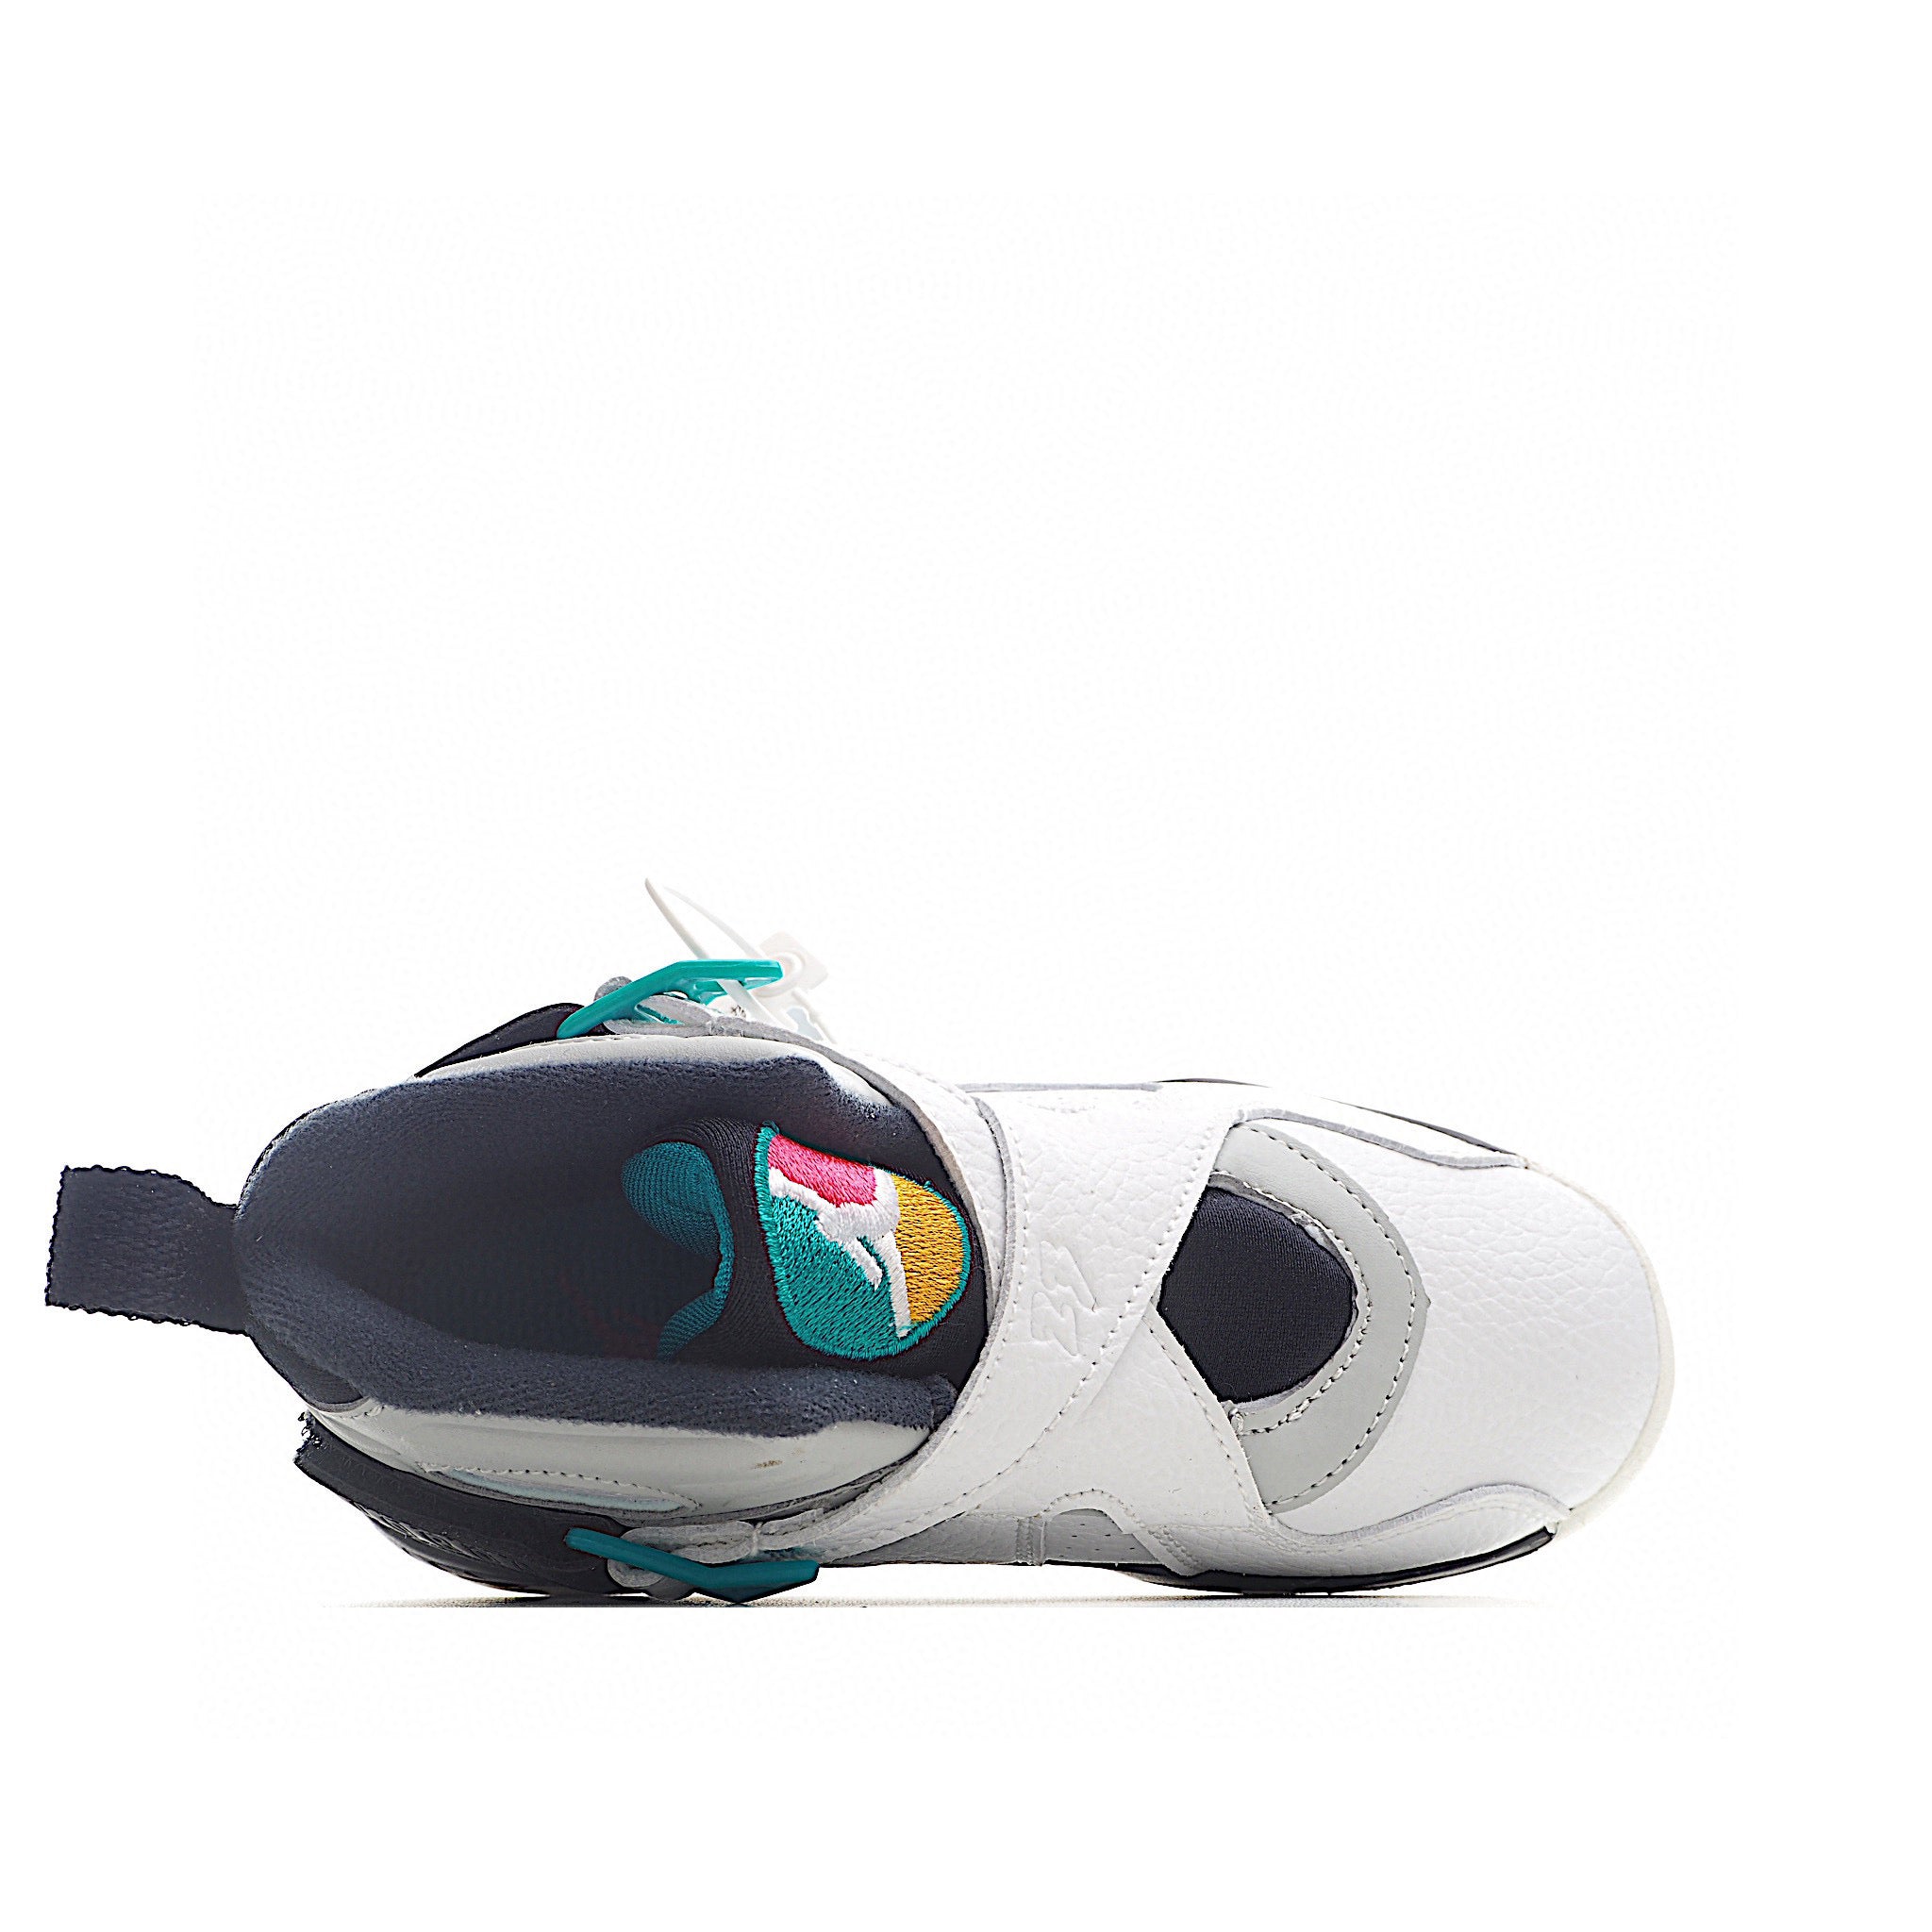 Nike air jordan 8 retro white blue shoes